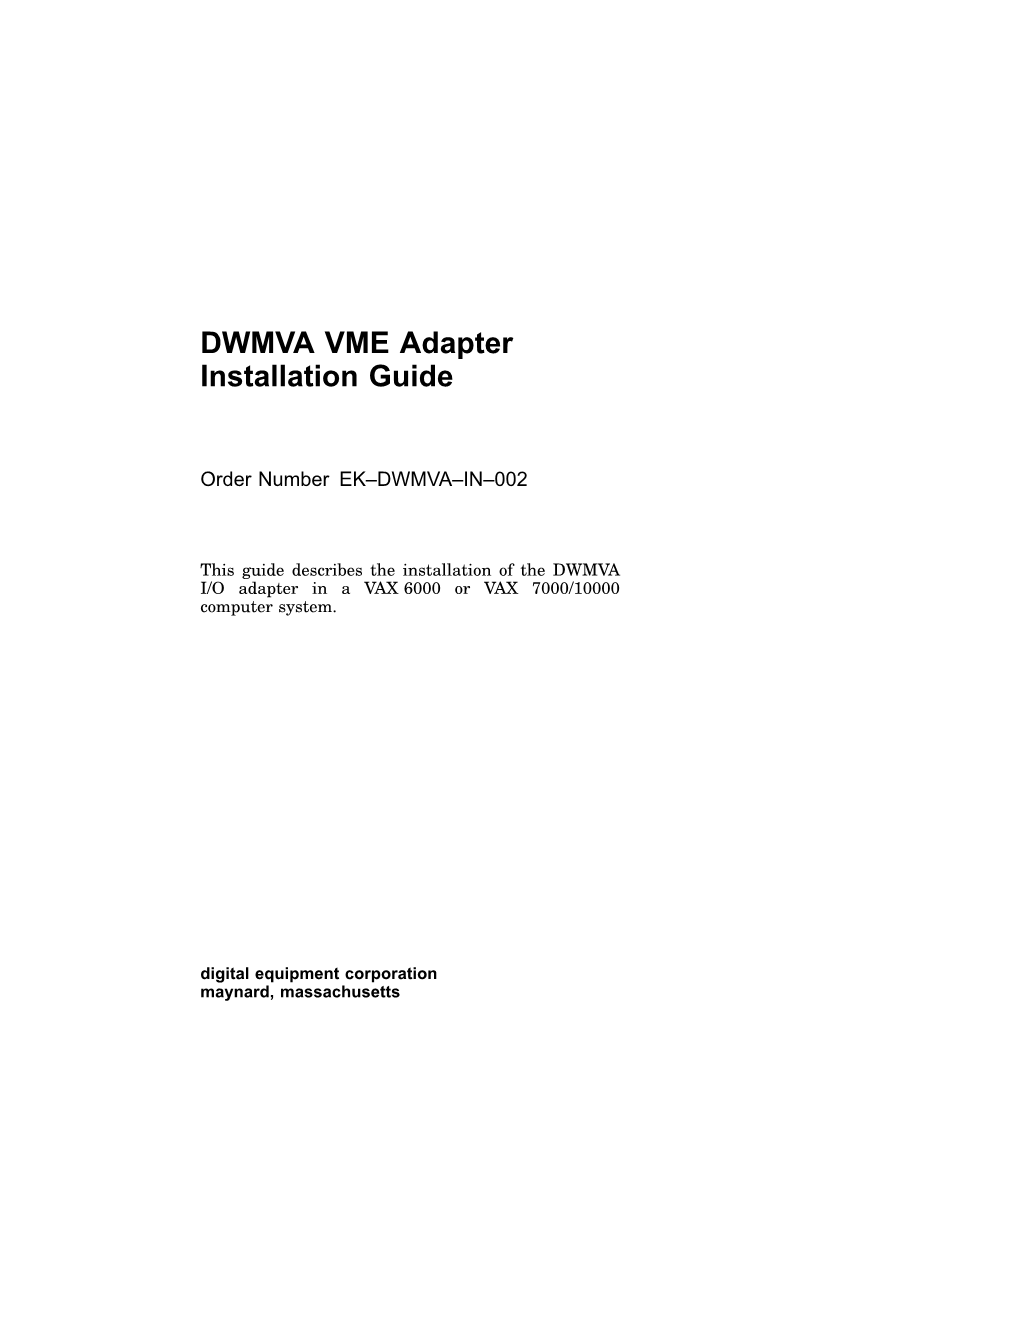 DWMVA VME Adapter Installation Guide